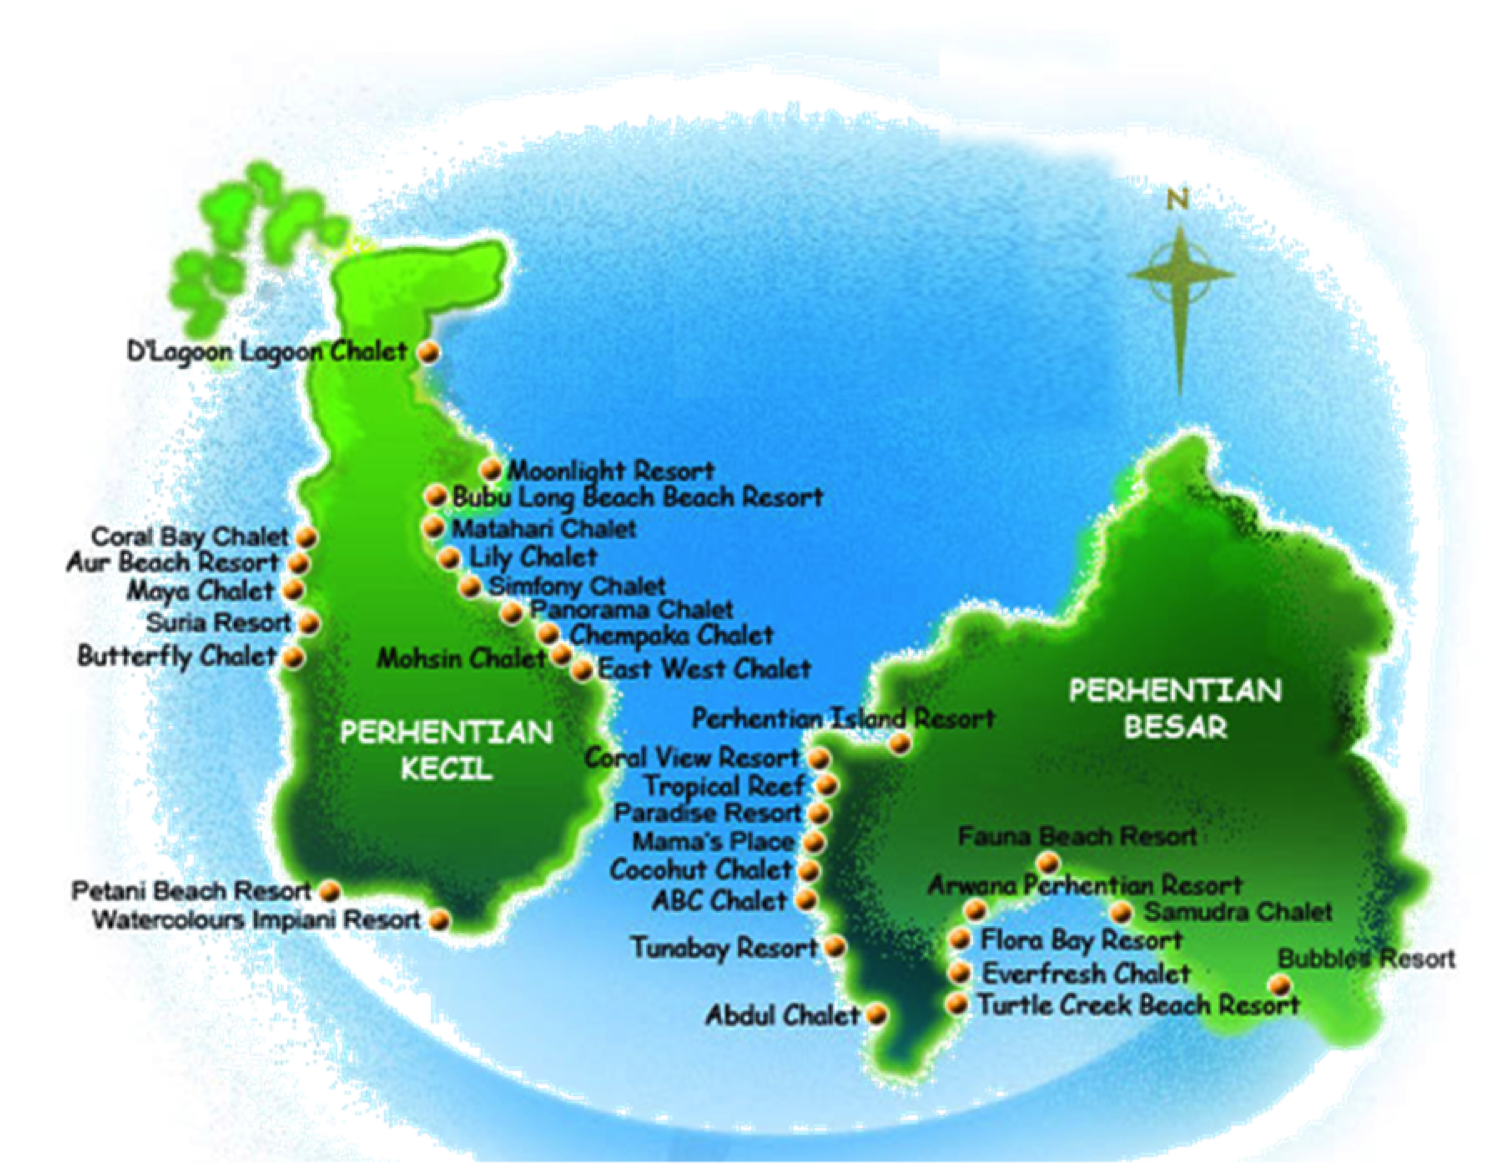 And island which parts. Перхентианские острова в Малайзии. Остров Перхентиан-Бесар Малайзия. Перхентианские острова в Малайзии на карте. Перхентианы на карте.